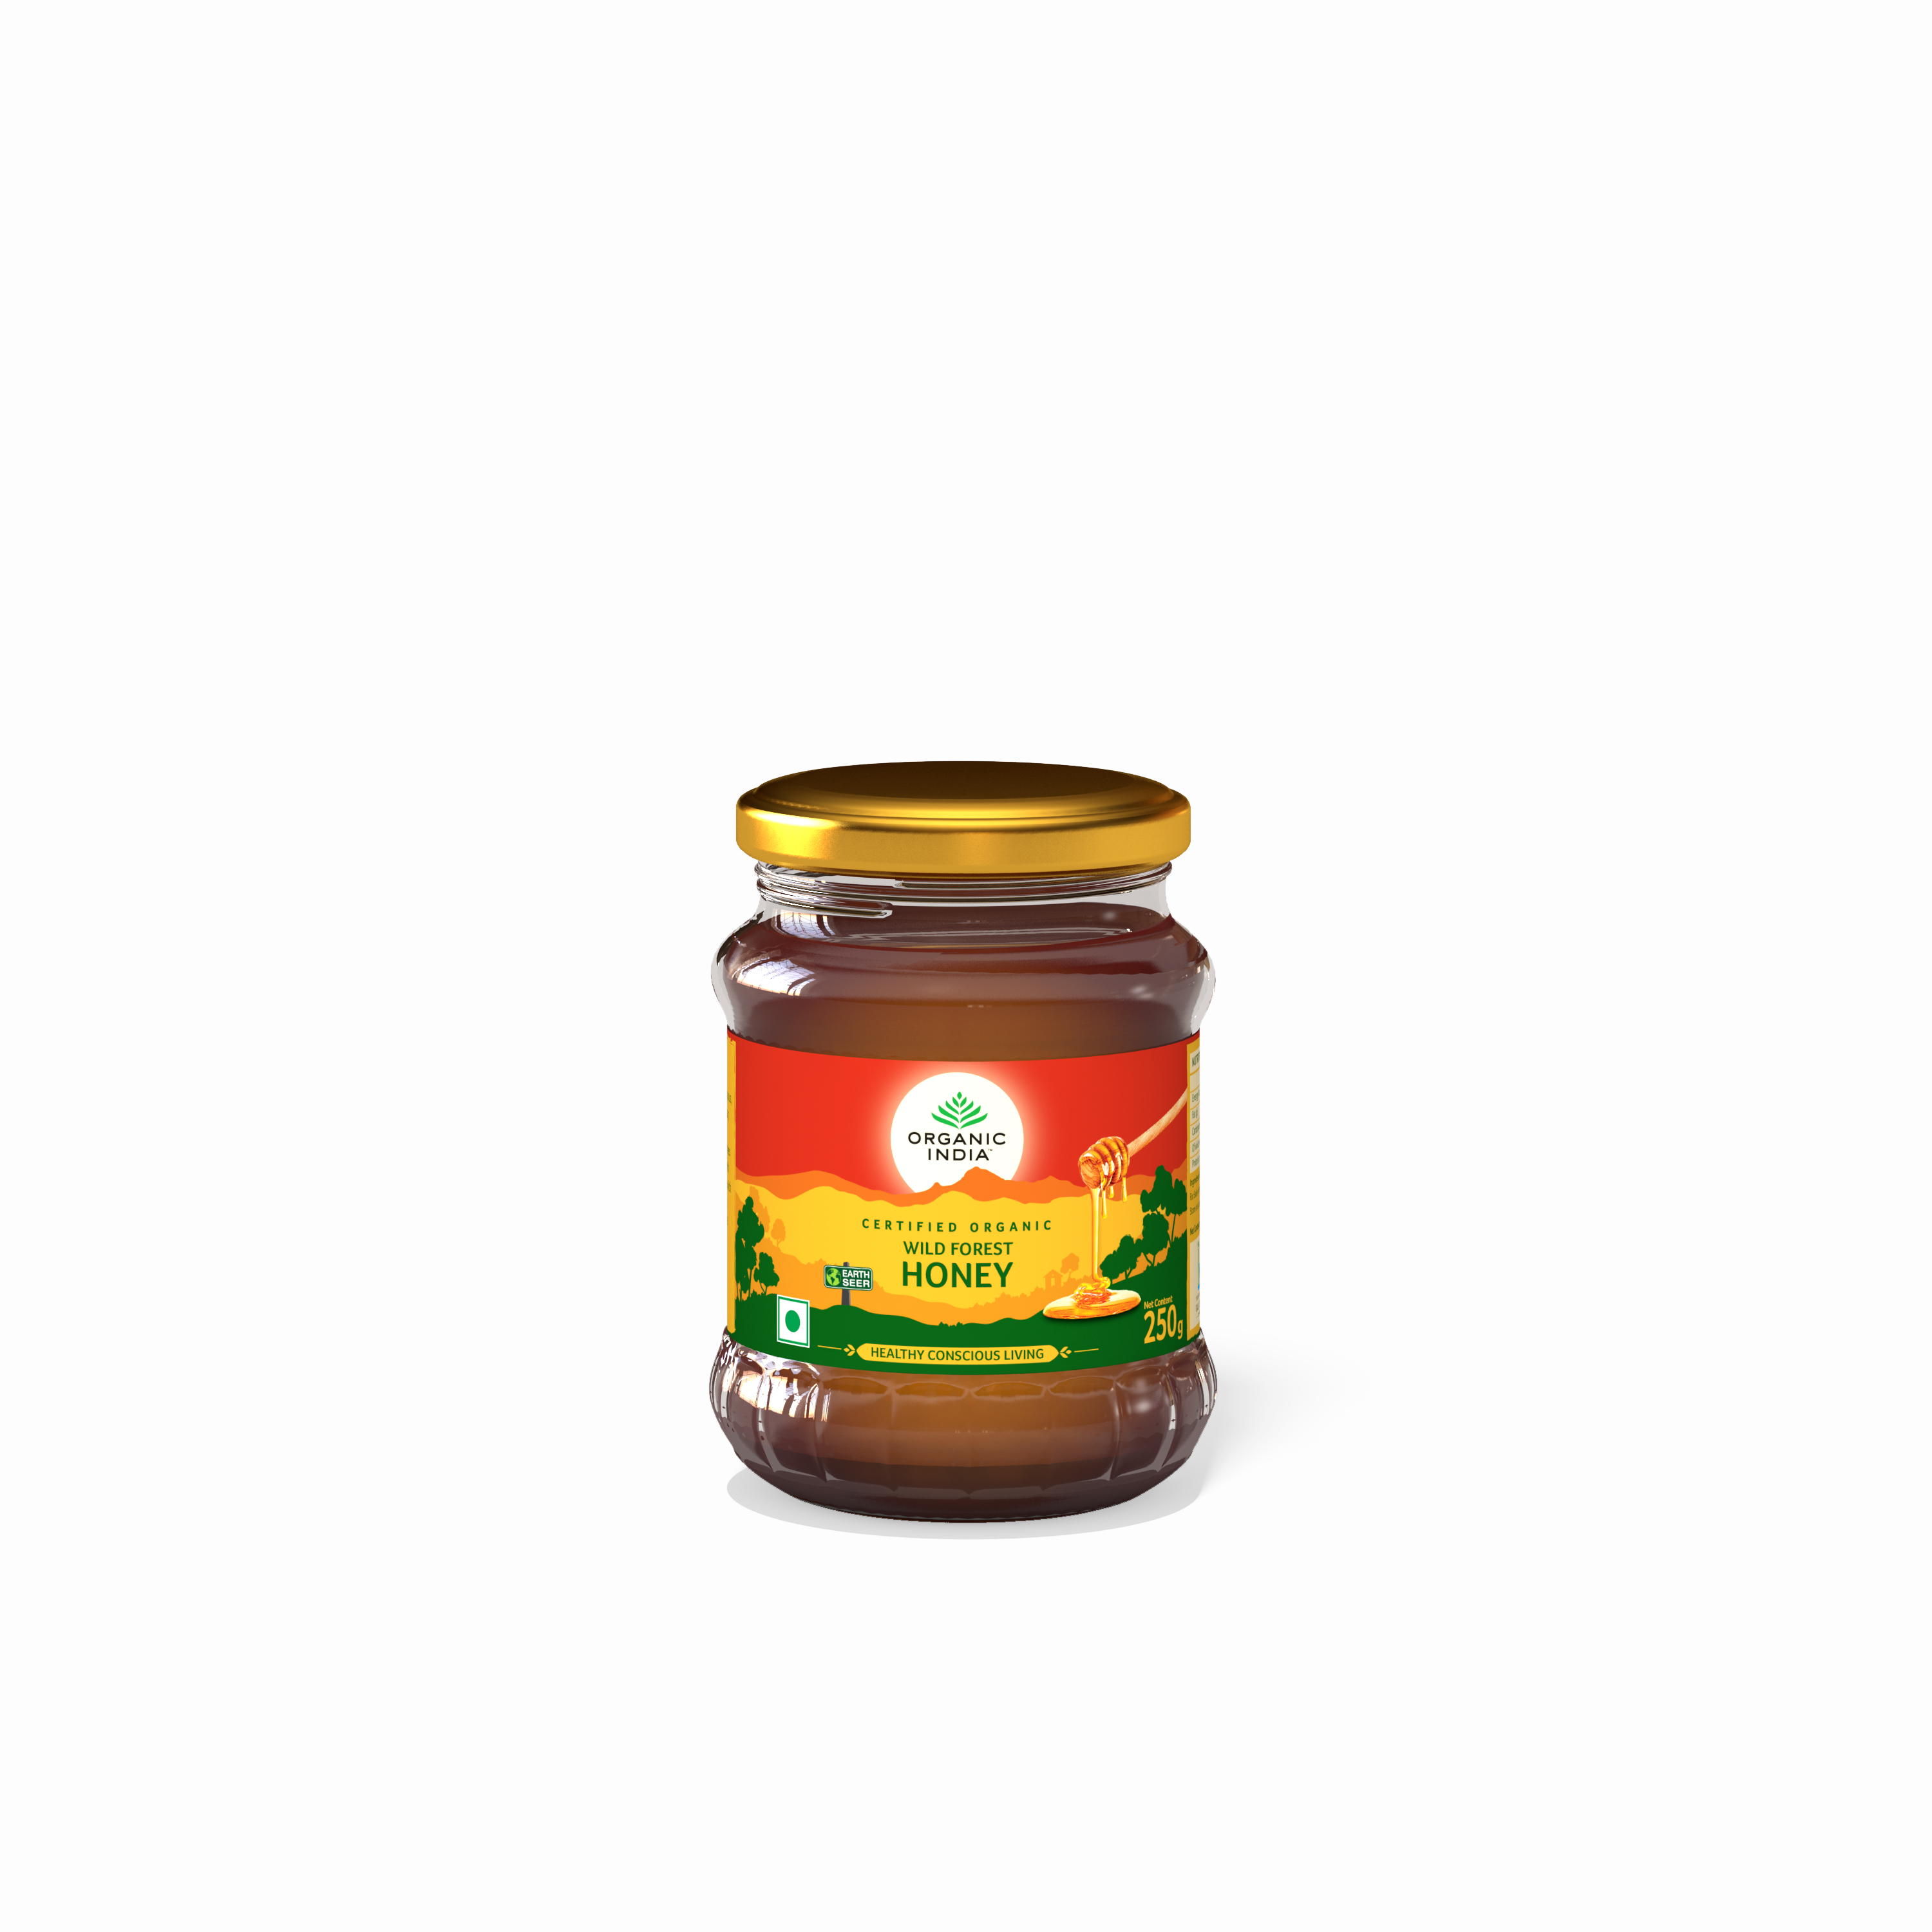 Organic India Honey wild Forest